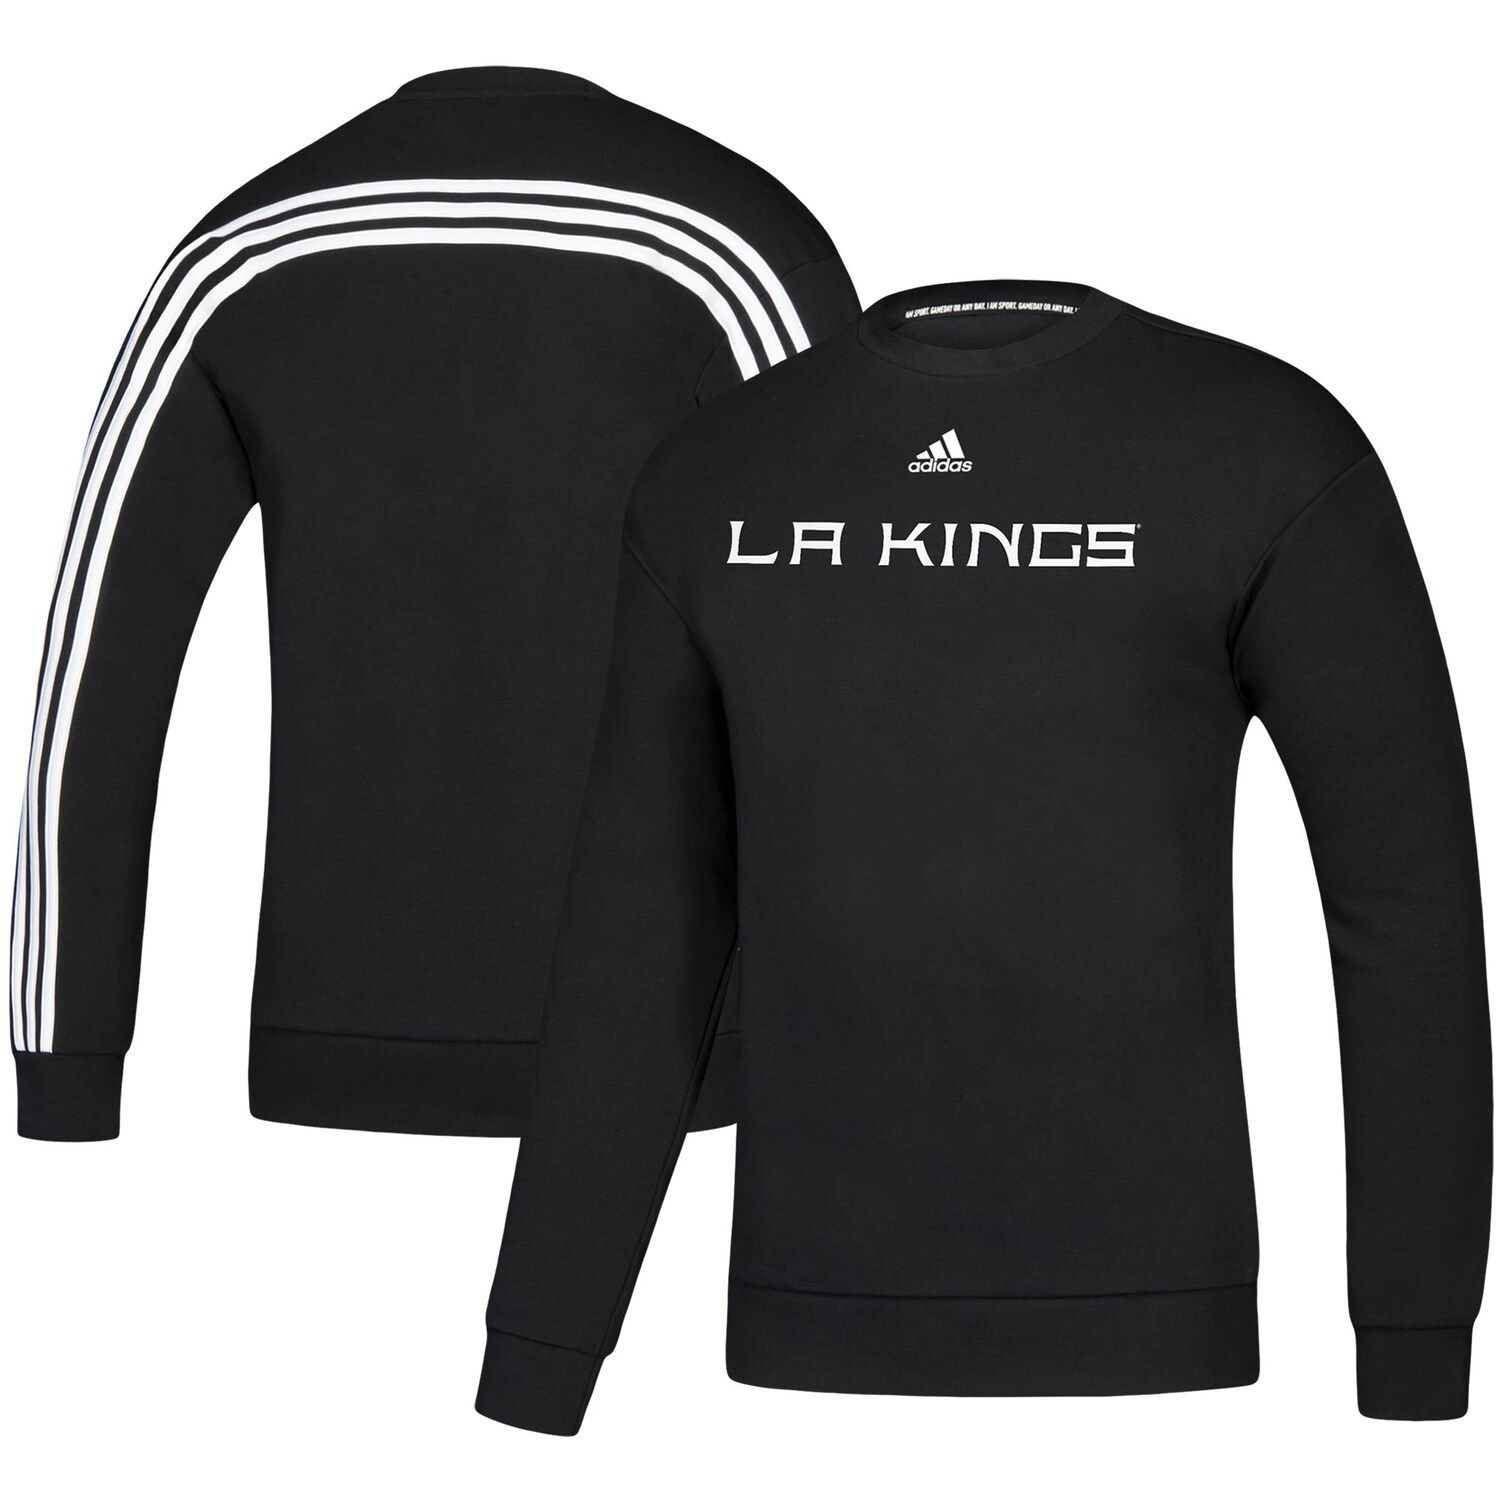 la kings sweatshirt